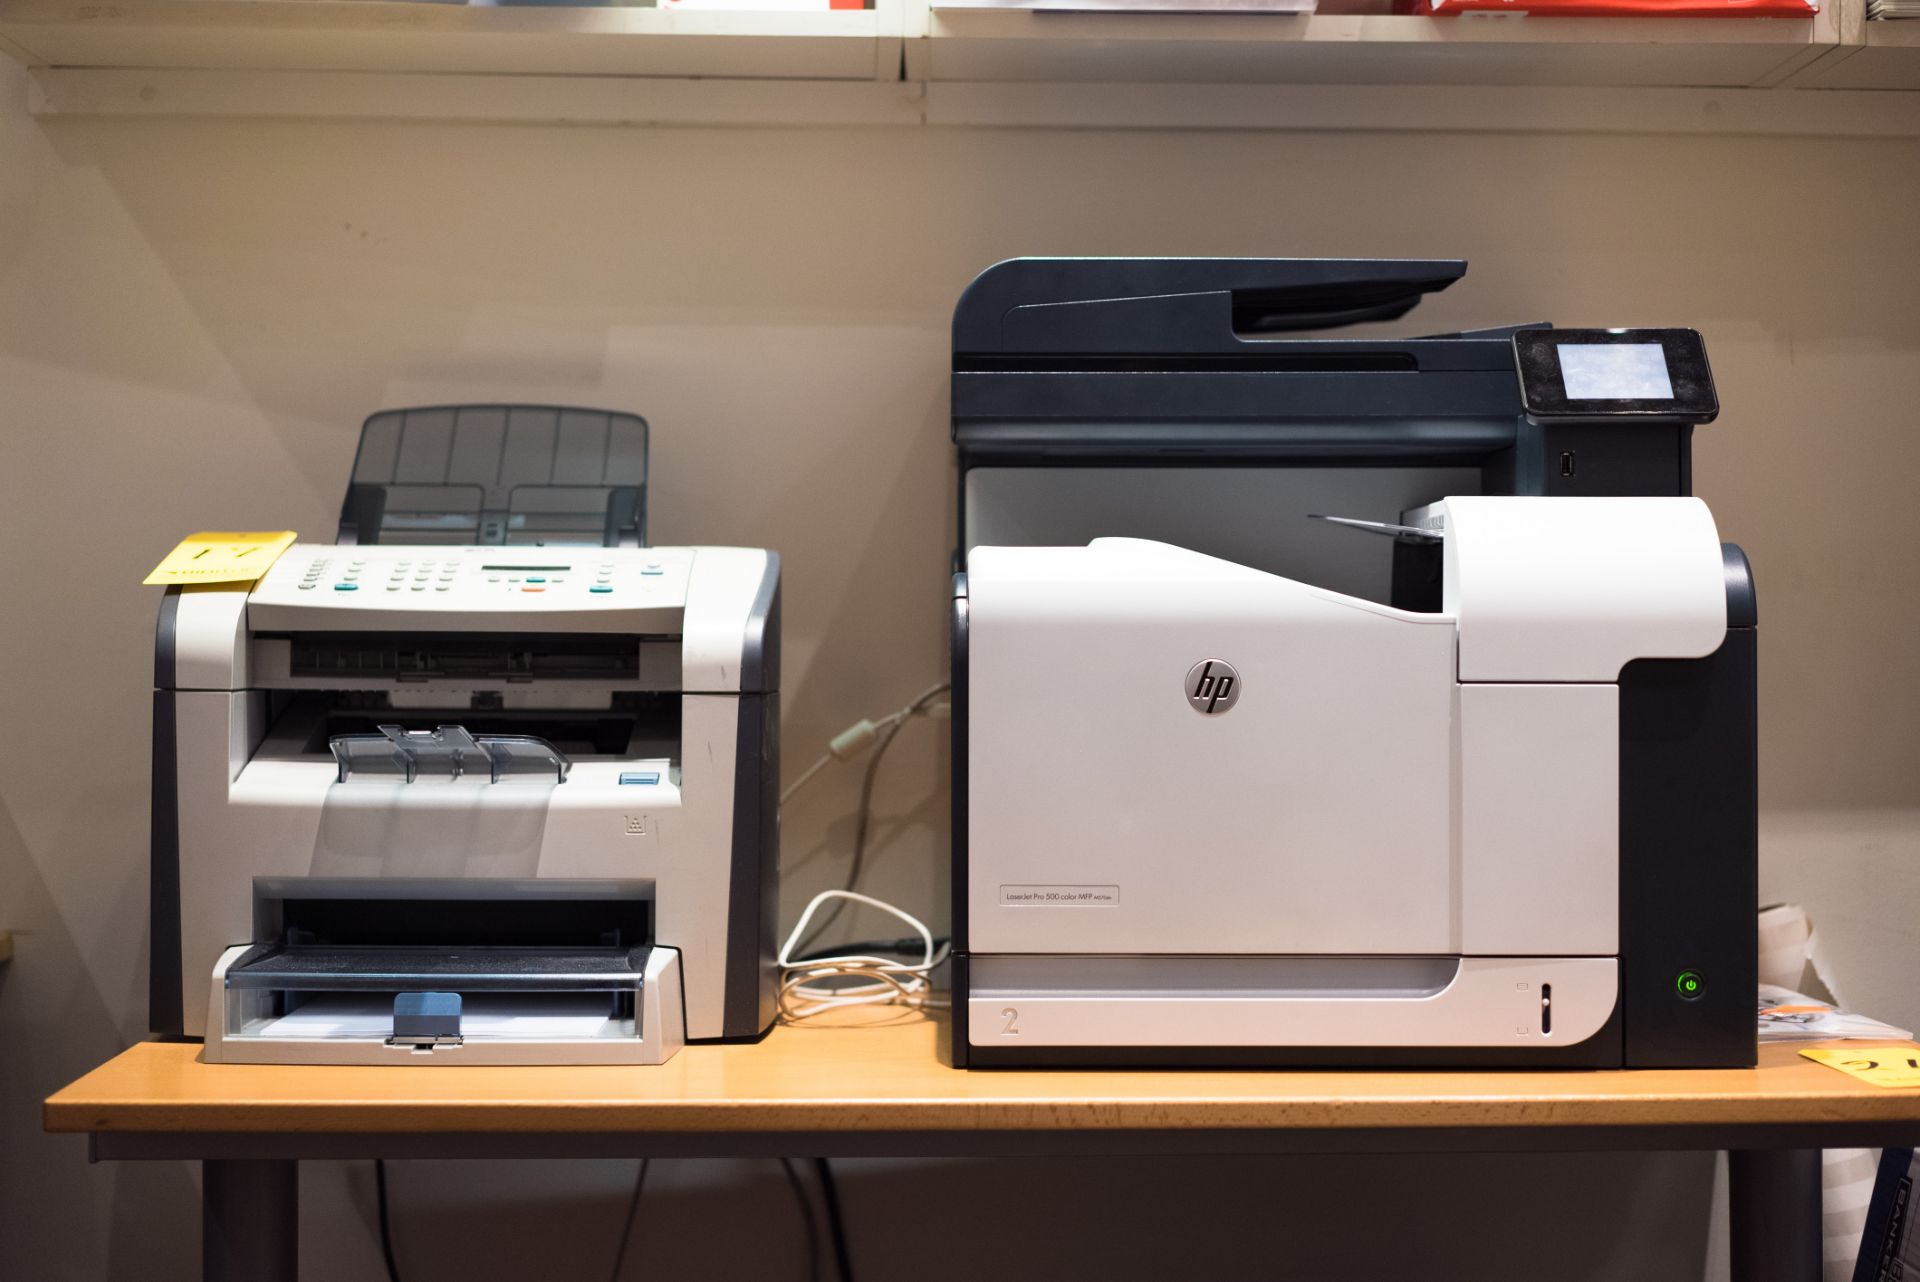 HP Laserjet 3050 Fax Machine & LaserJet Pro 500 Color MFP M570dn Printer - Image 3 of 4